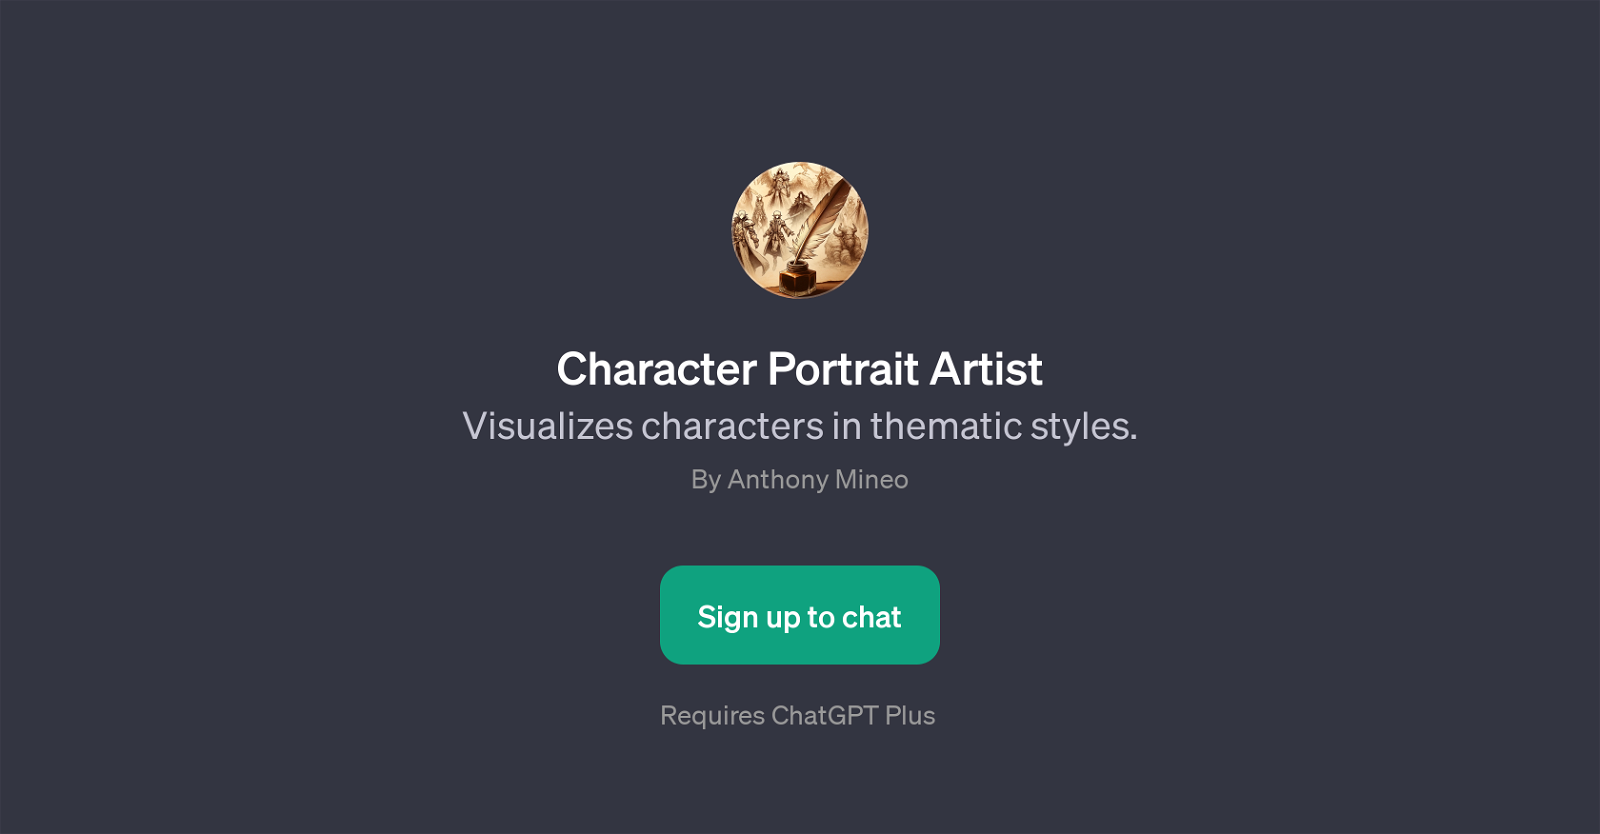 Character Portrait Artist website